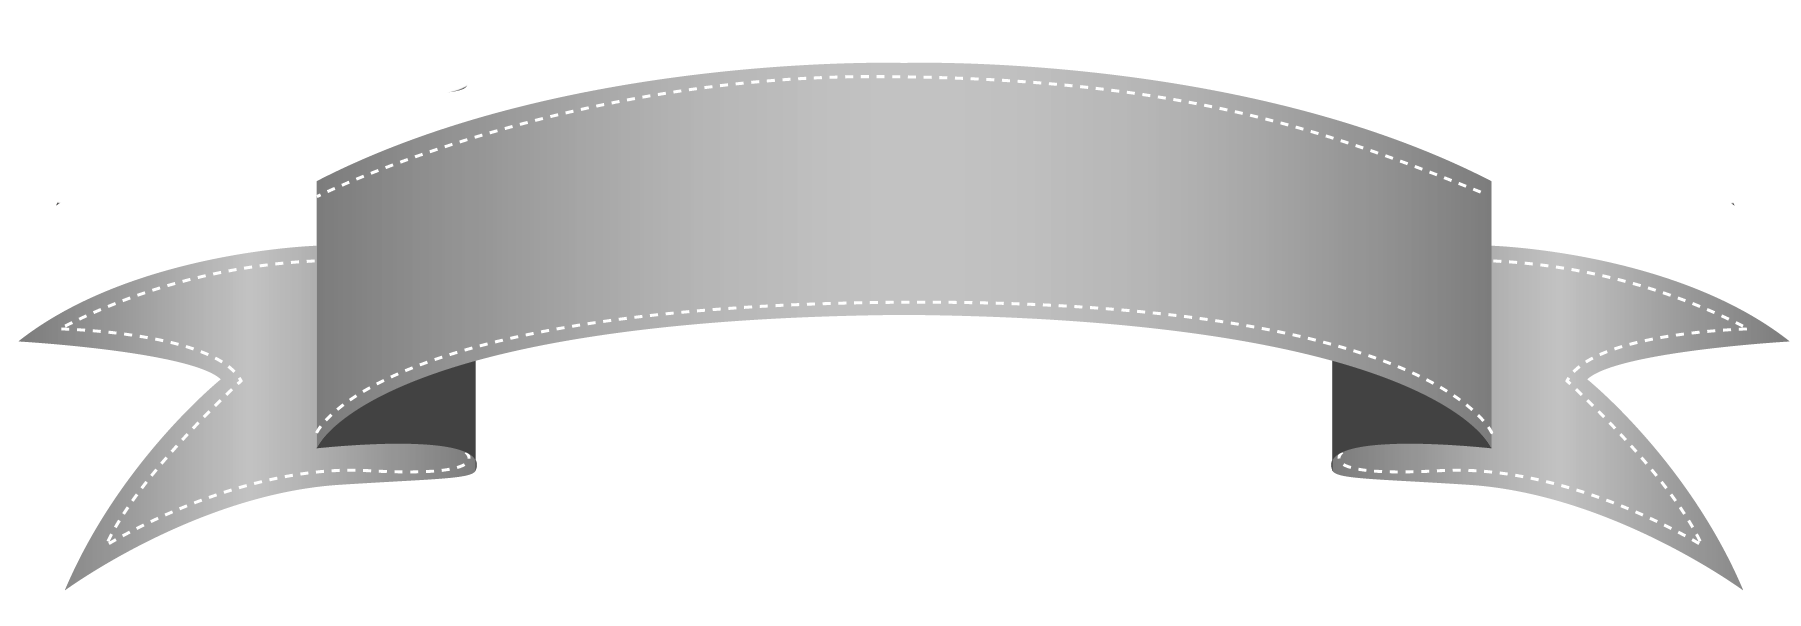 clipart banner shape